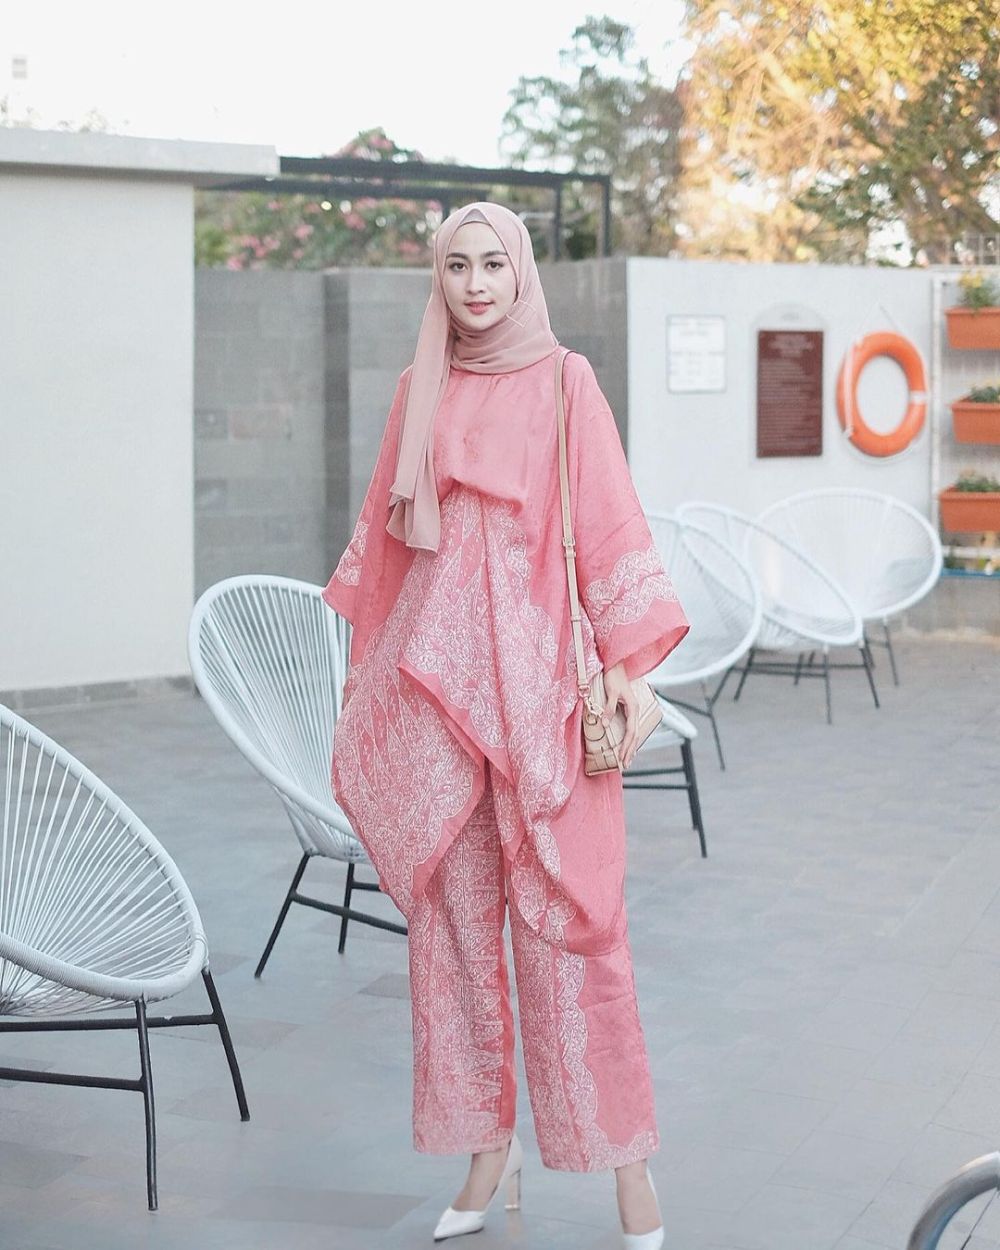 Ide Hijab Style Kondangan Dengan Outfit Nuansa Etnik